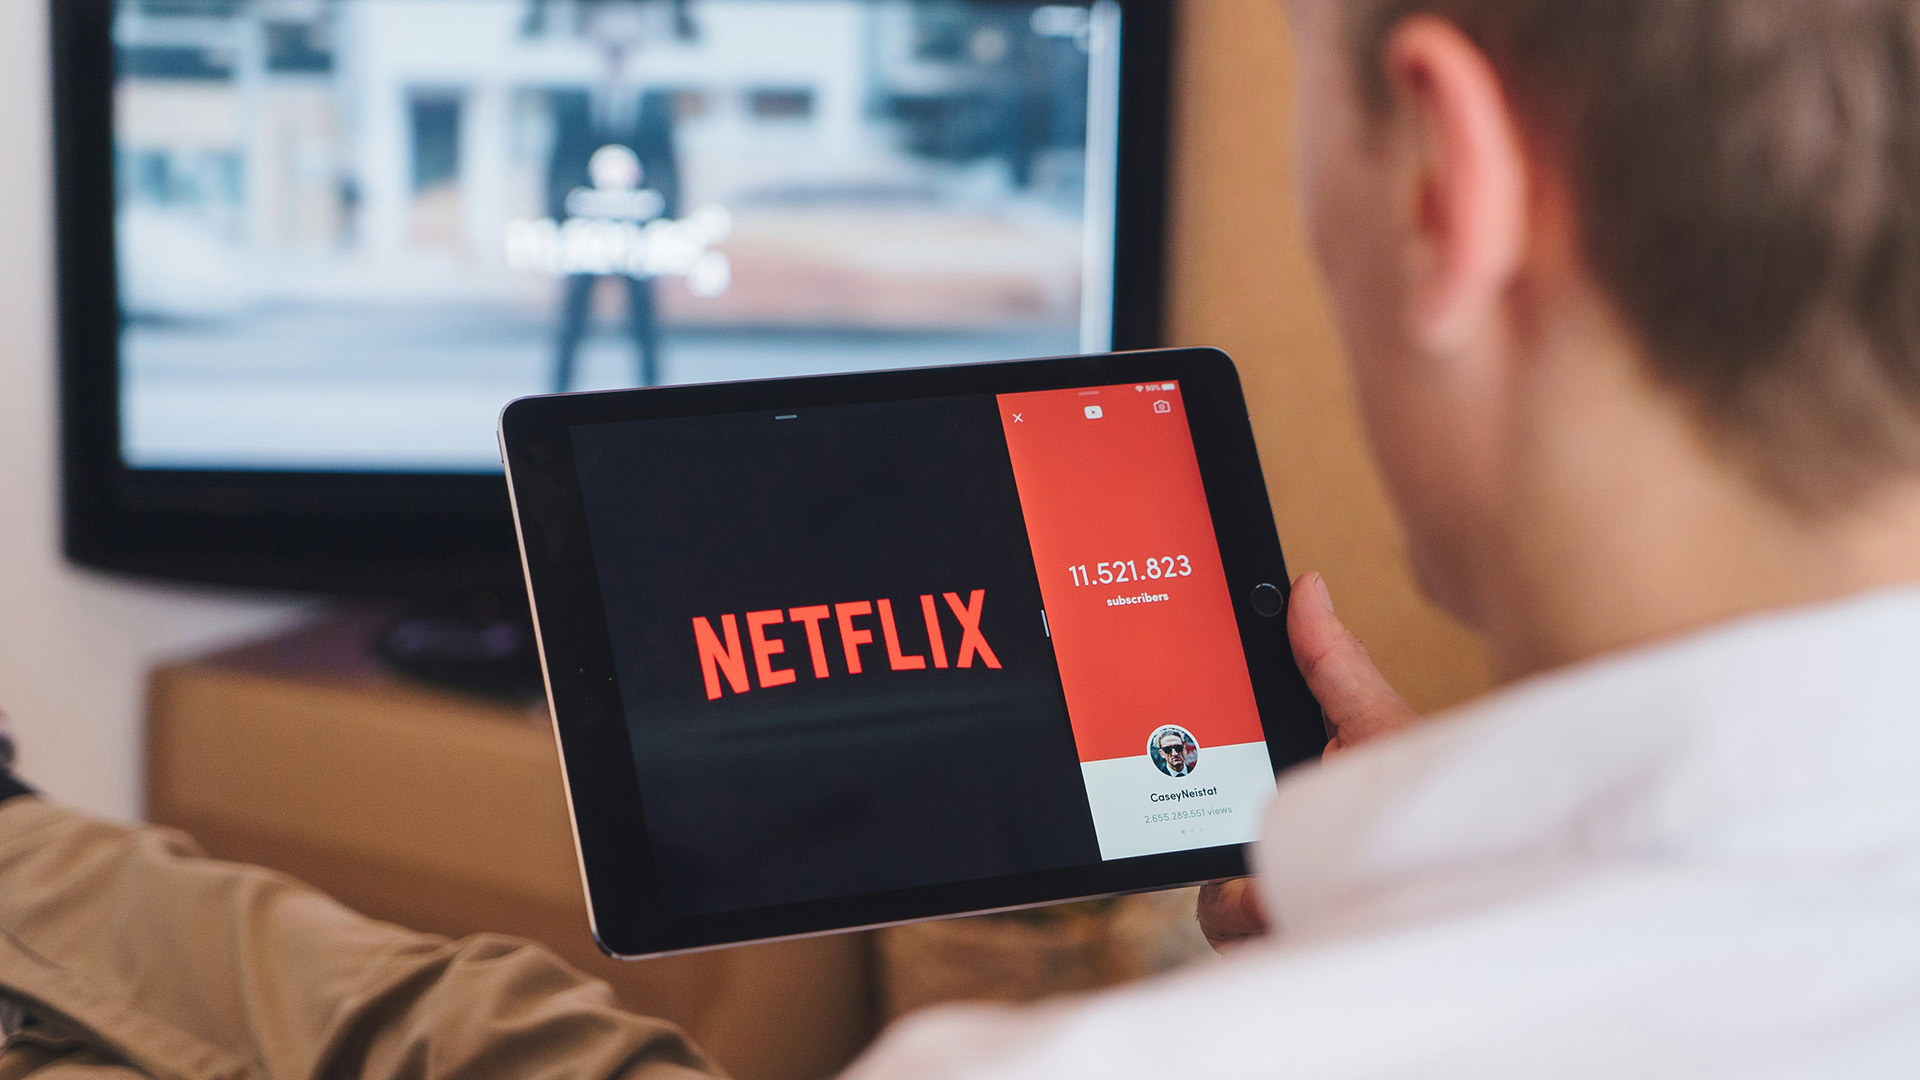 Netflix Devices - MAT Foundry